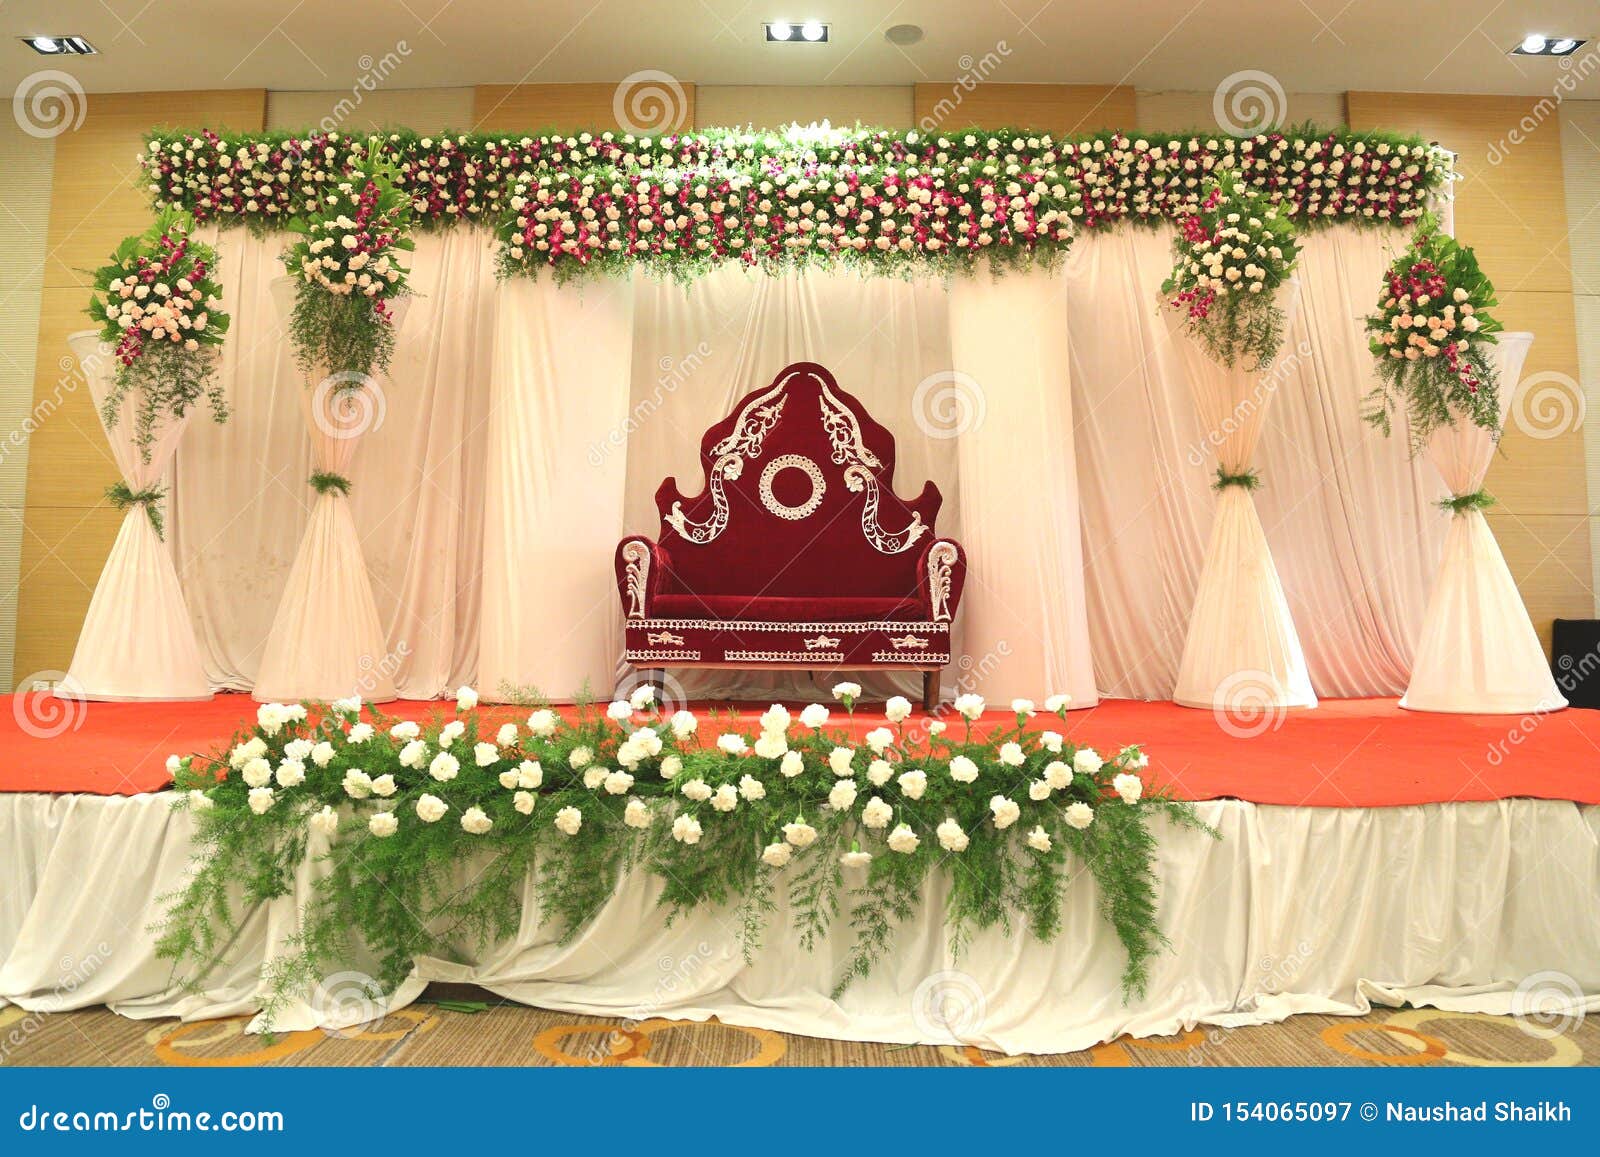 pink floral wall decor | Wedding Decorations, Flower Decoration, Marriage  Decoration Melting Flowers Blog